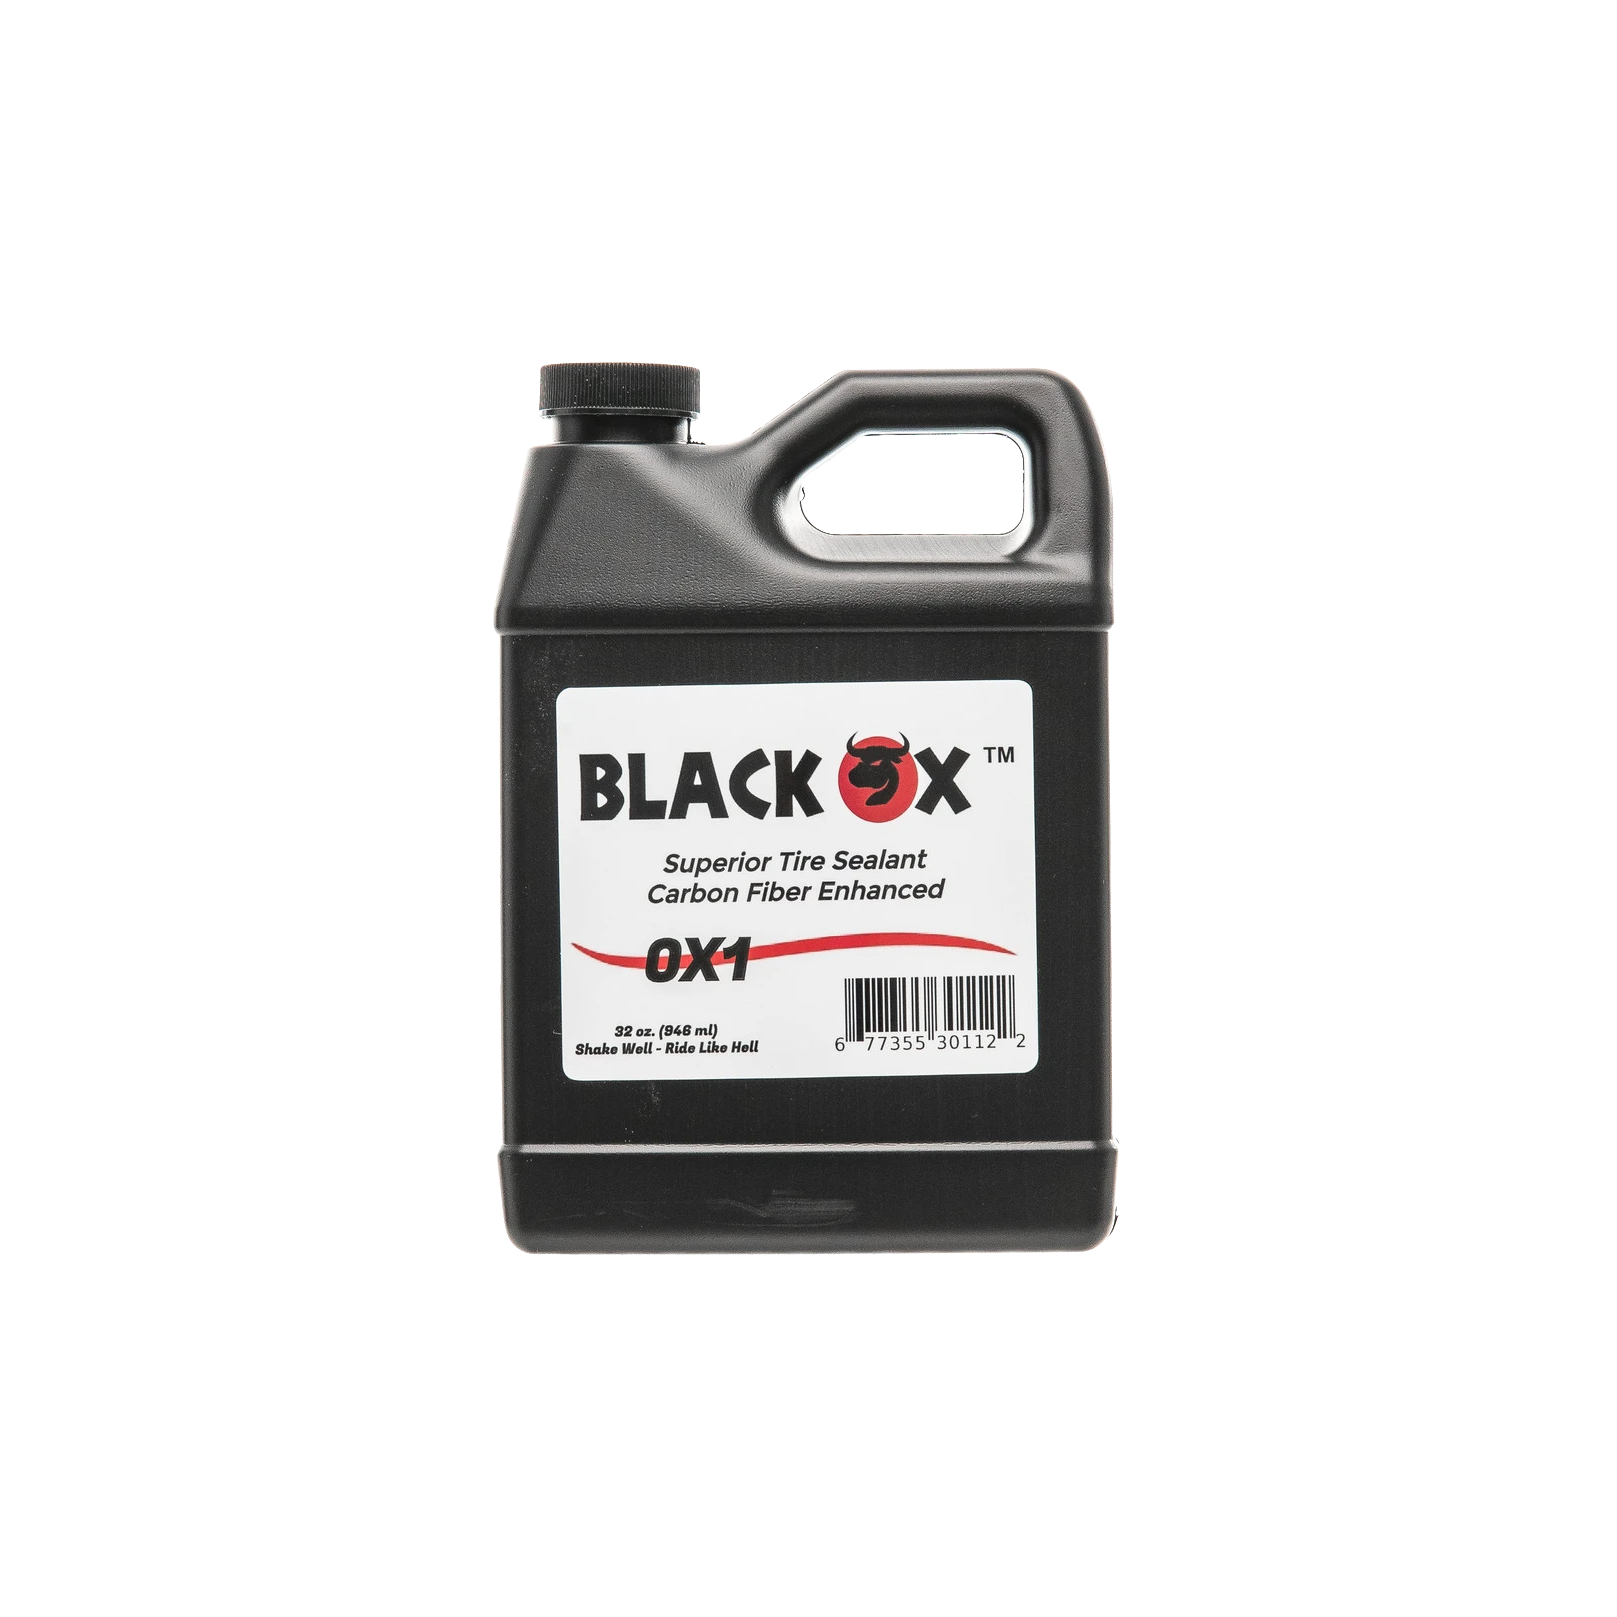 Black Ox OX1 Tire Sealant, 32oz